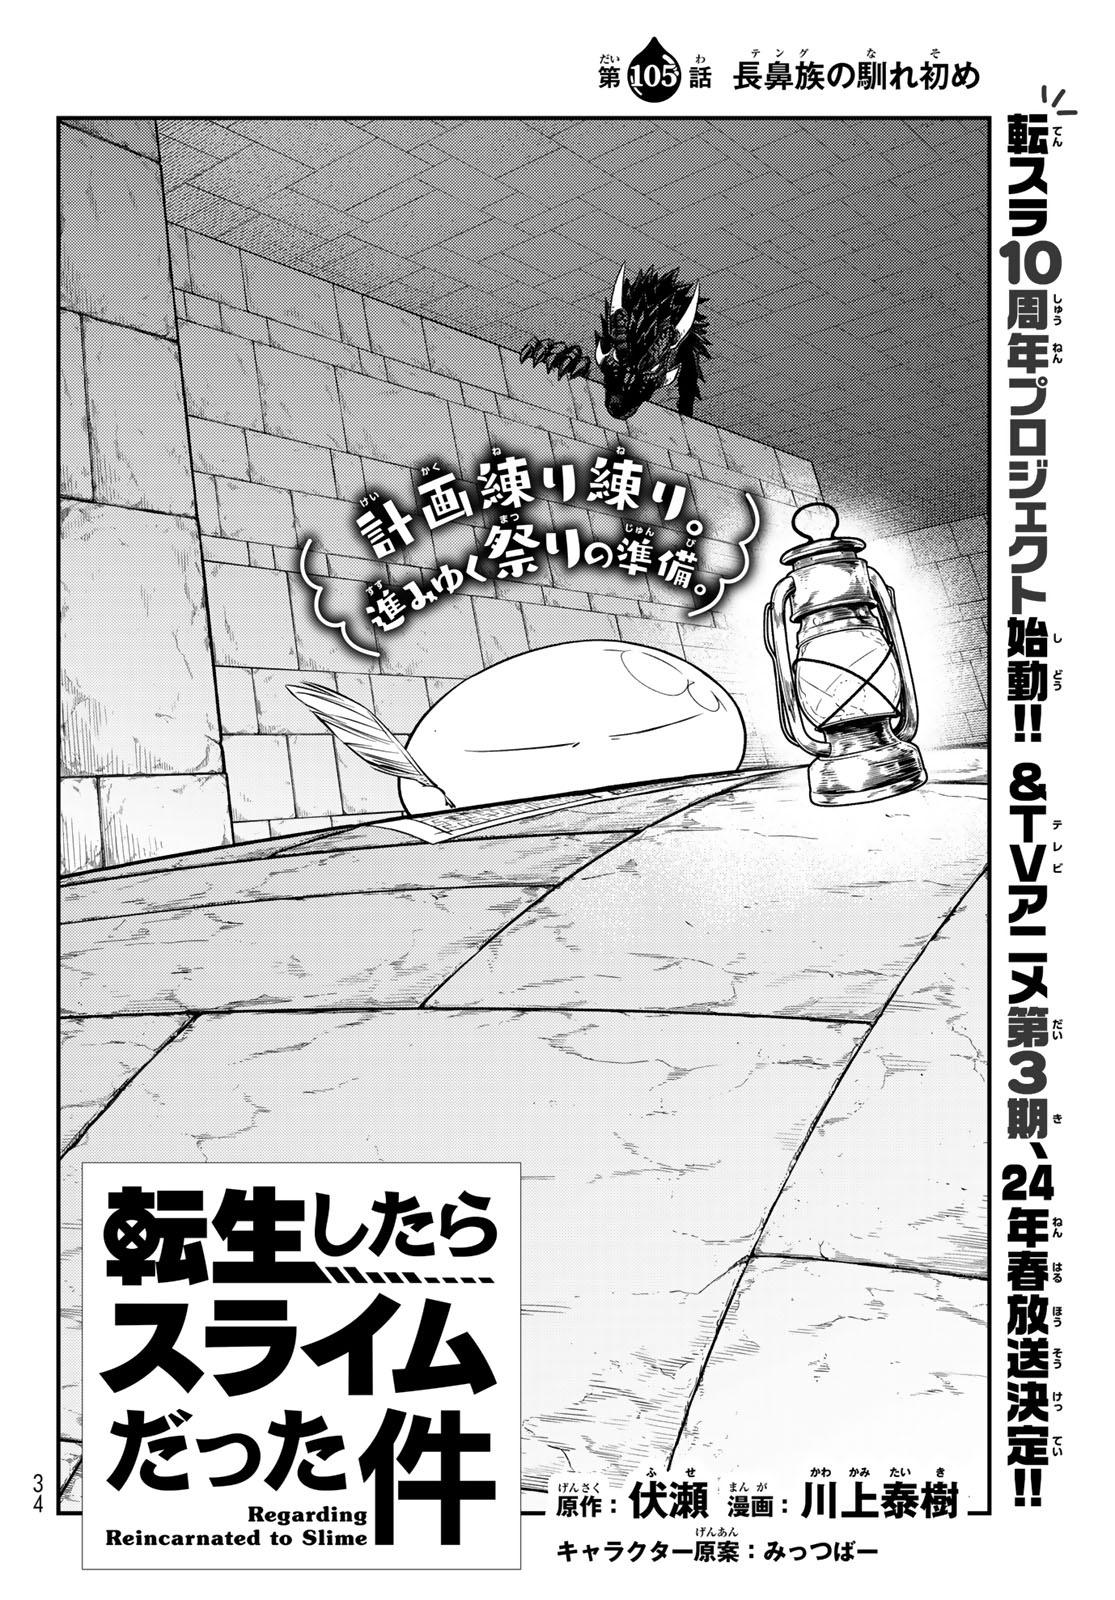 DISC] Tensei Shitara Slime Datta Ken Chapter 100 (Tempest) : r/manga